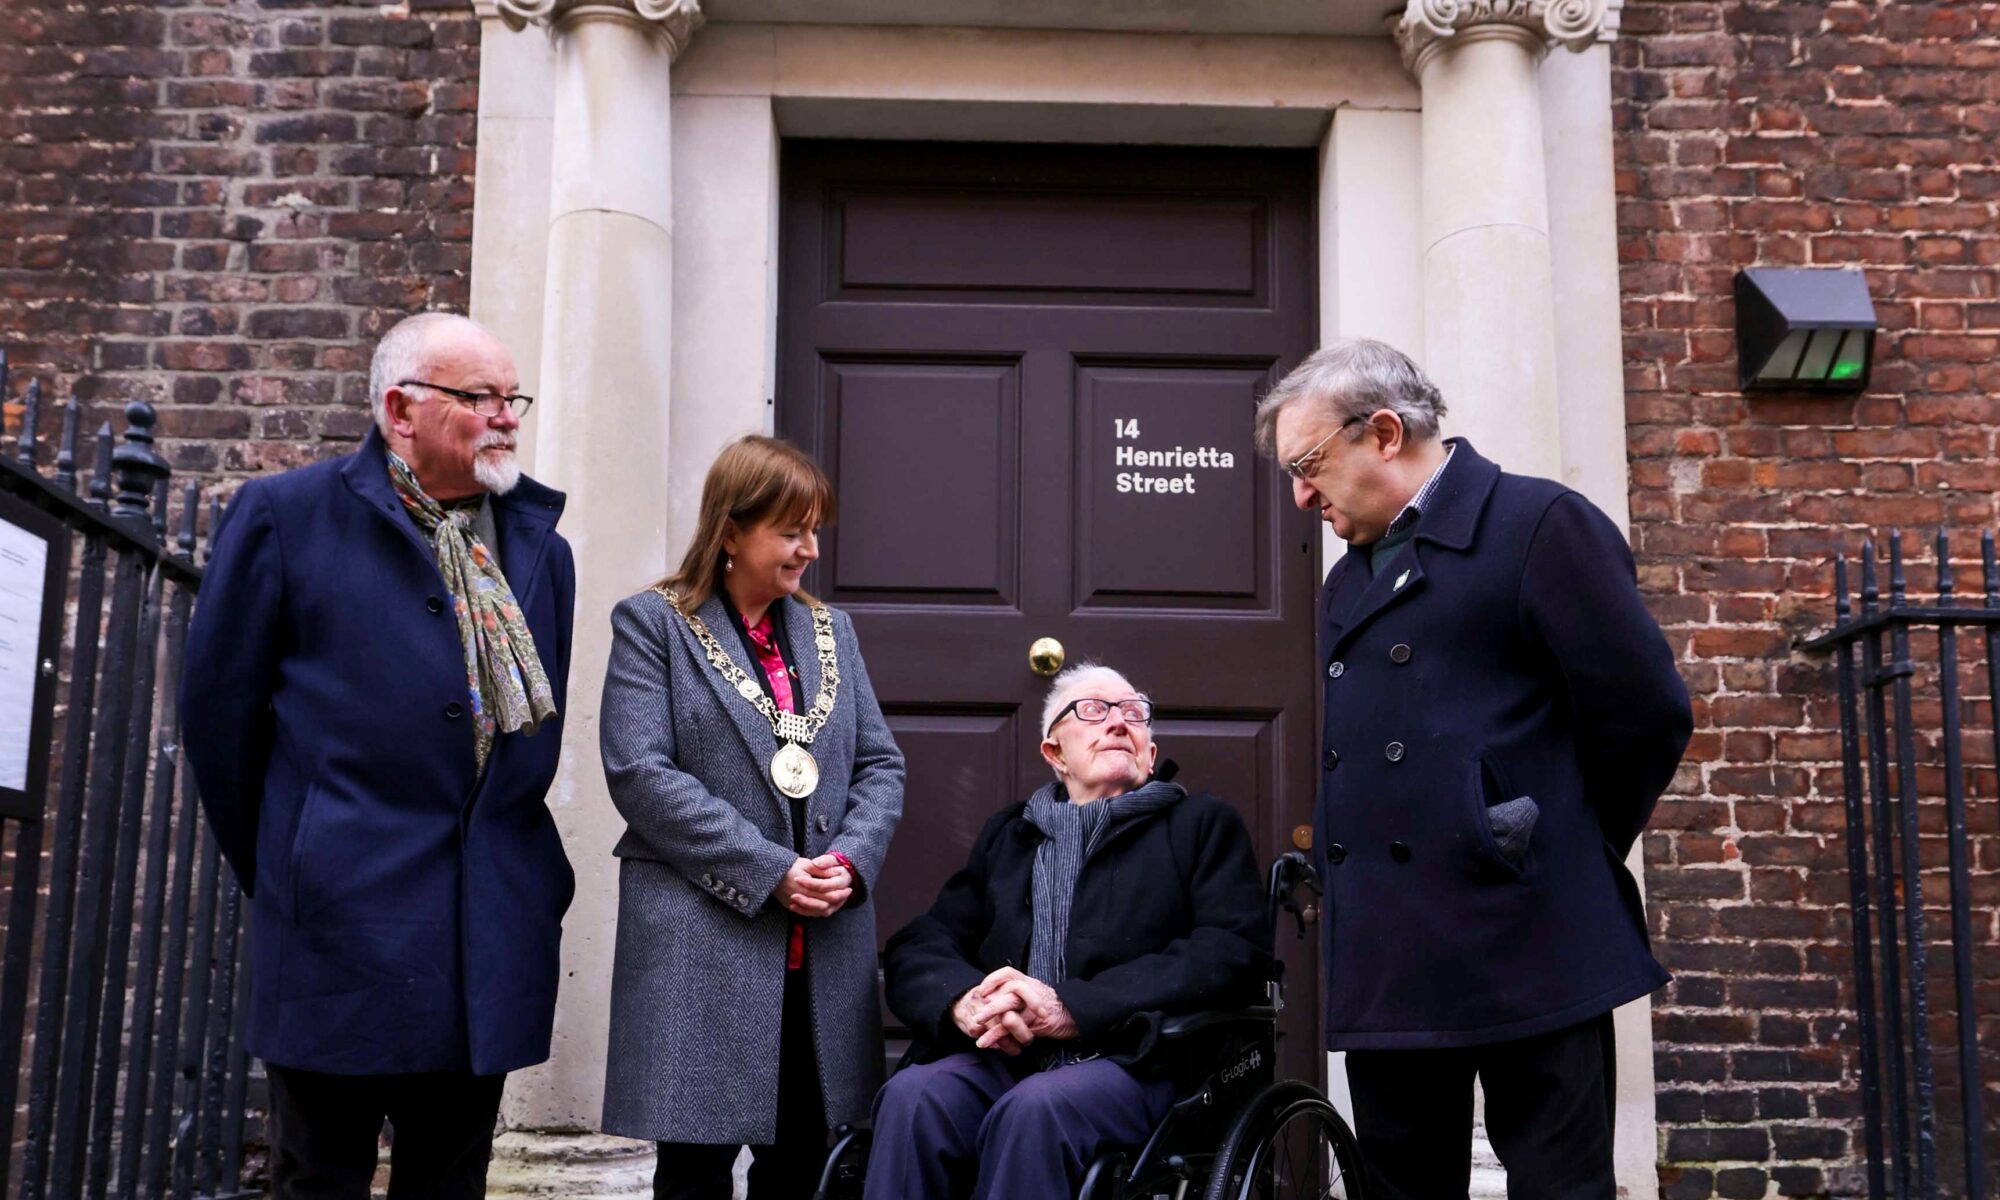 Photograph taken at 14 Henrietta Street, showing Fergus Whelan, Lord Mayor Caroline Conroy, Jimmy Phillips (nephew of Thomas Bryan), and Councillor Micheál Mac Donncha.